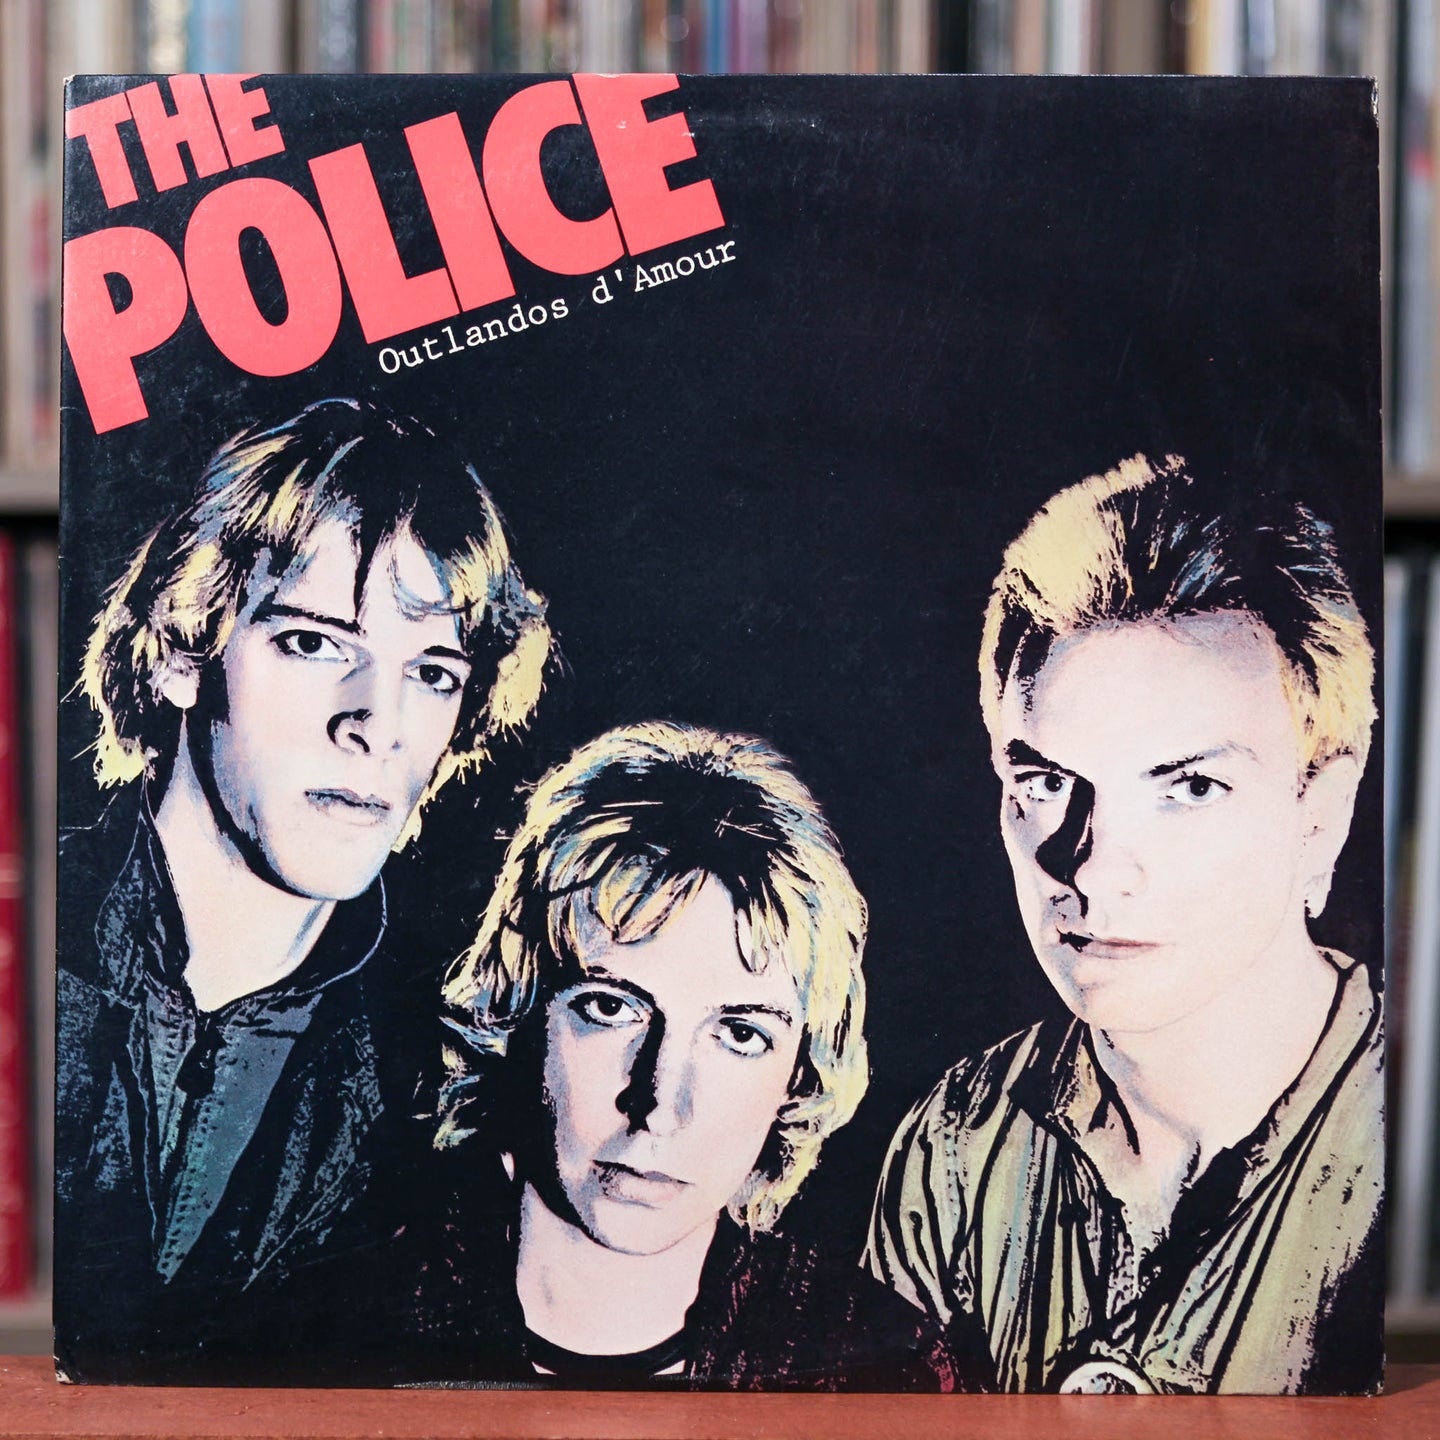 The Police - Outlandos D' Amour - 1979 A&M, VG++/VG+